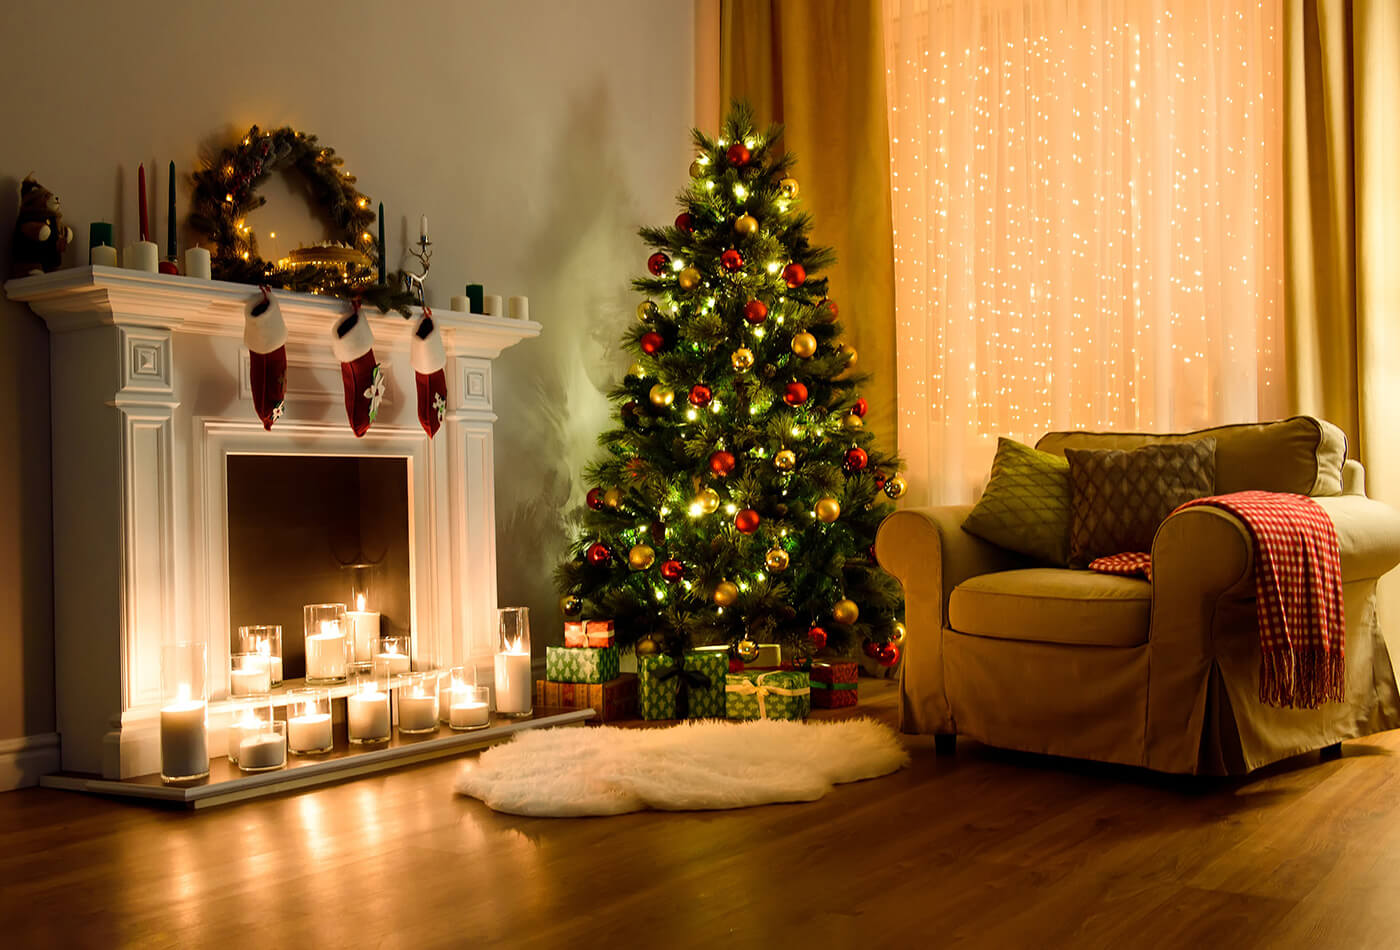 Christmas interior design - holiday cottage Christmas décor